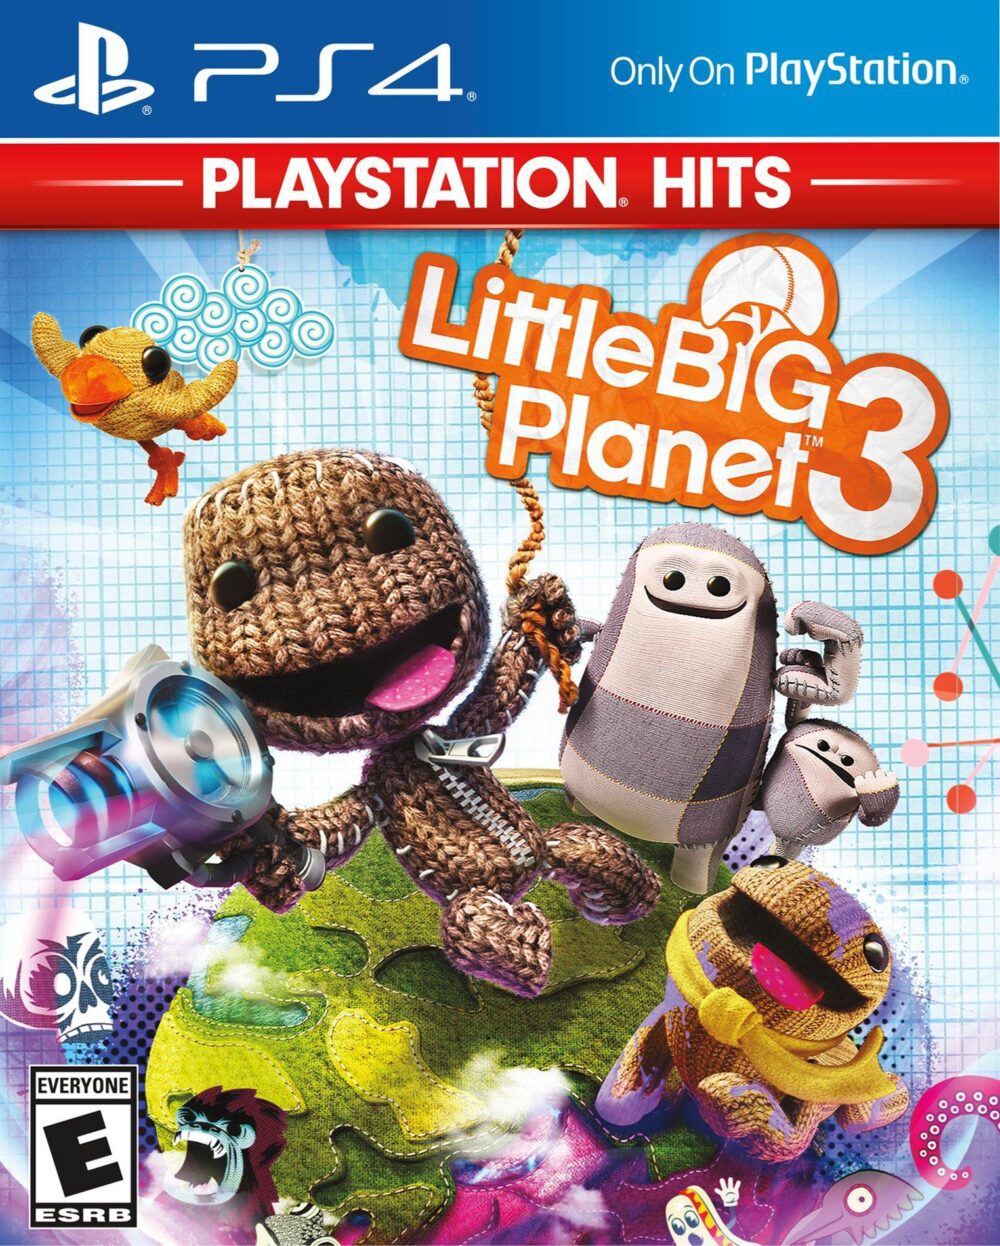 LittleBigPlanet 3 for PS4